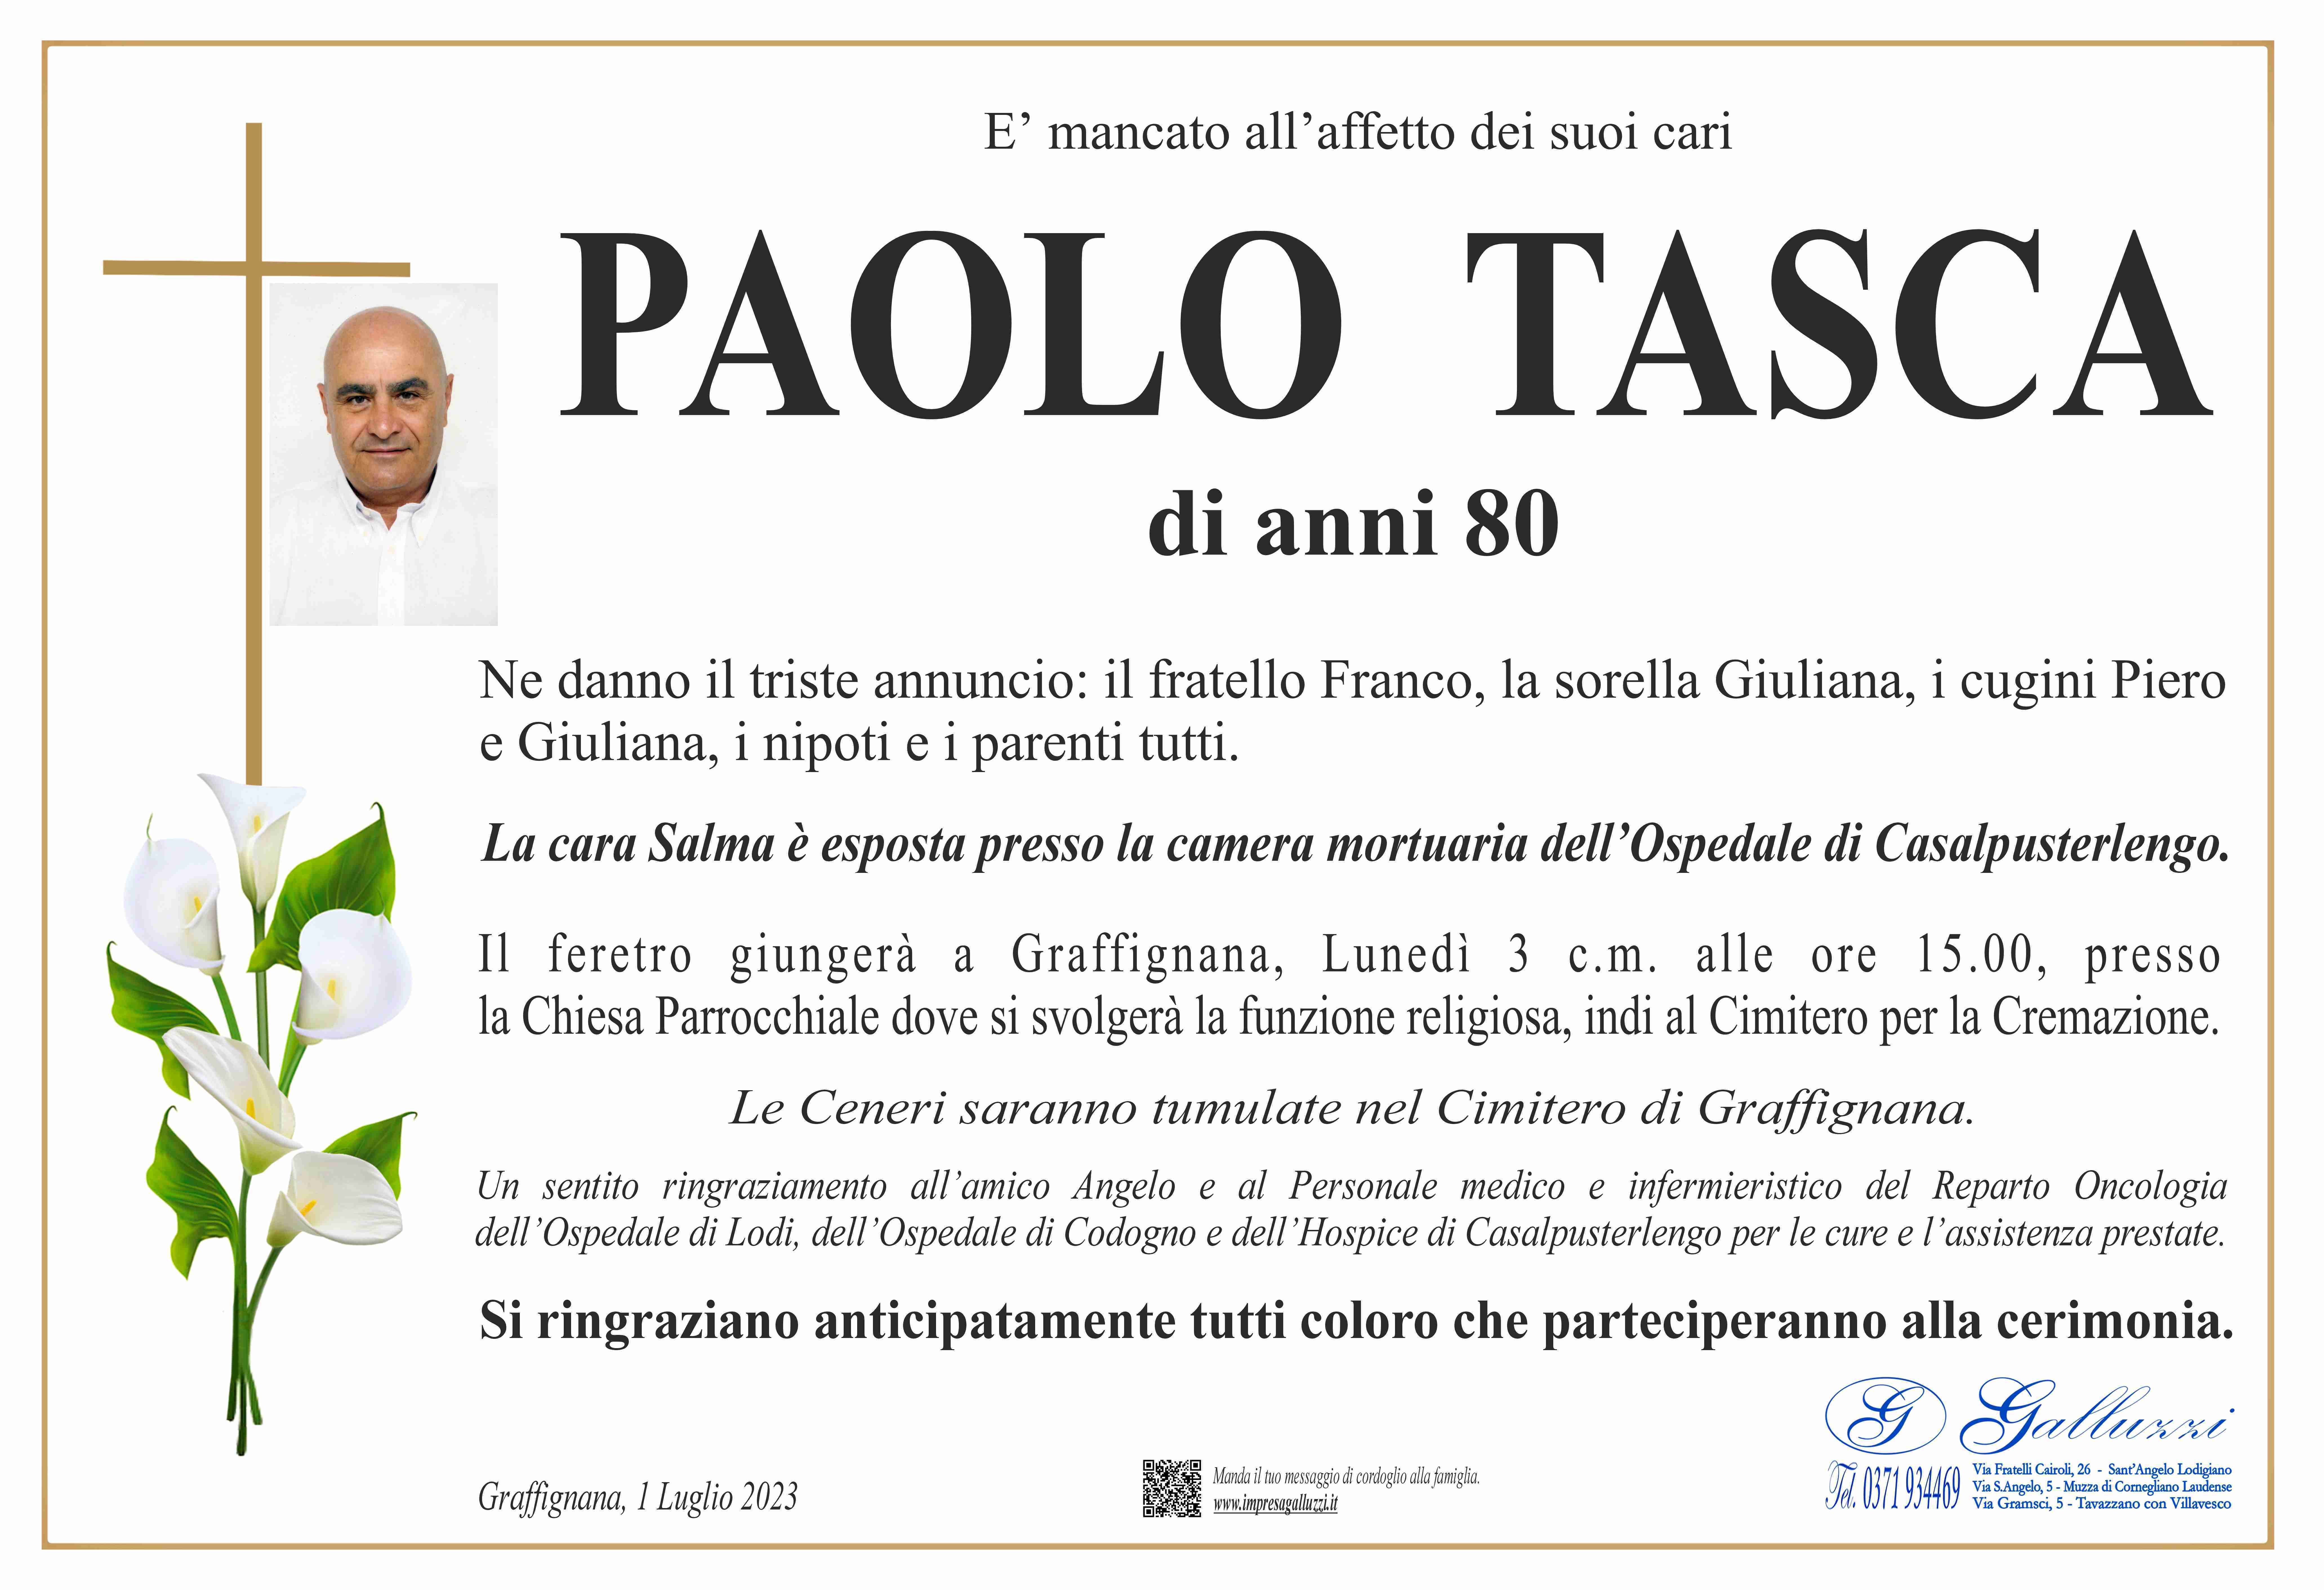 Paolo Tasca